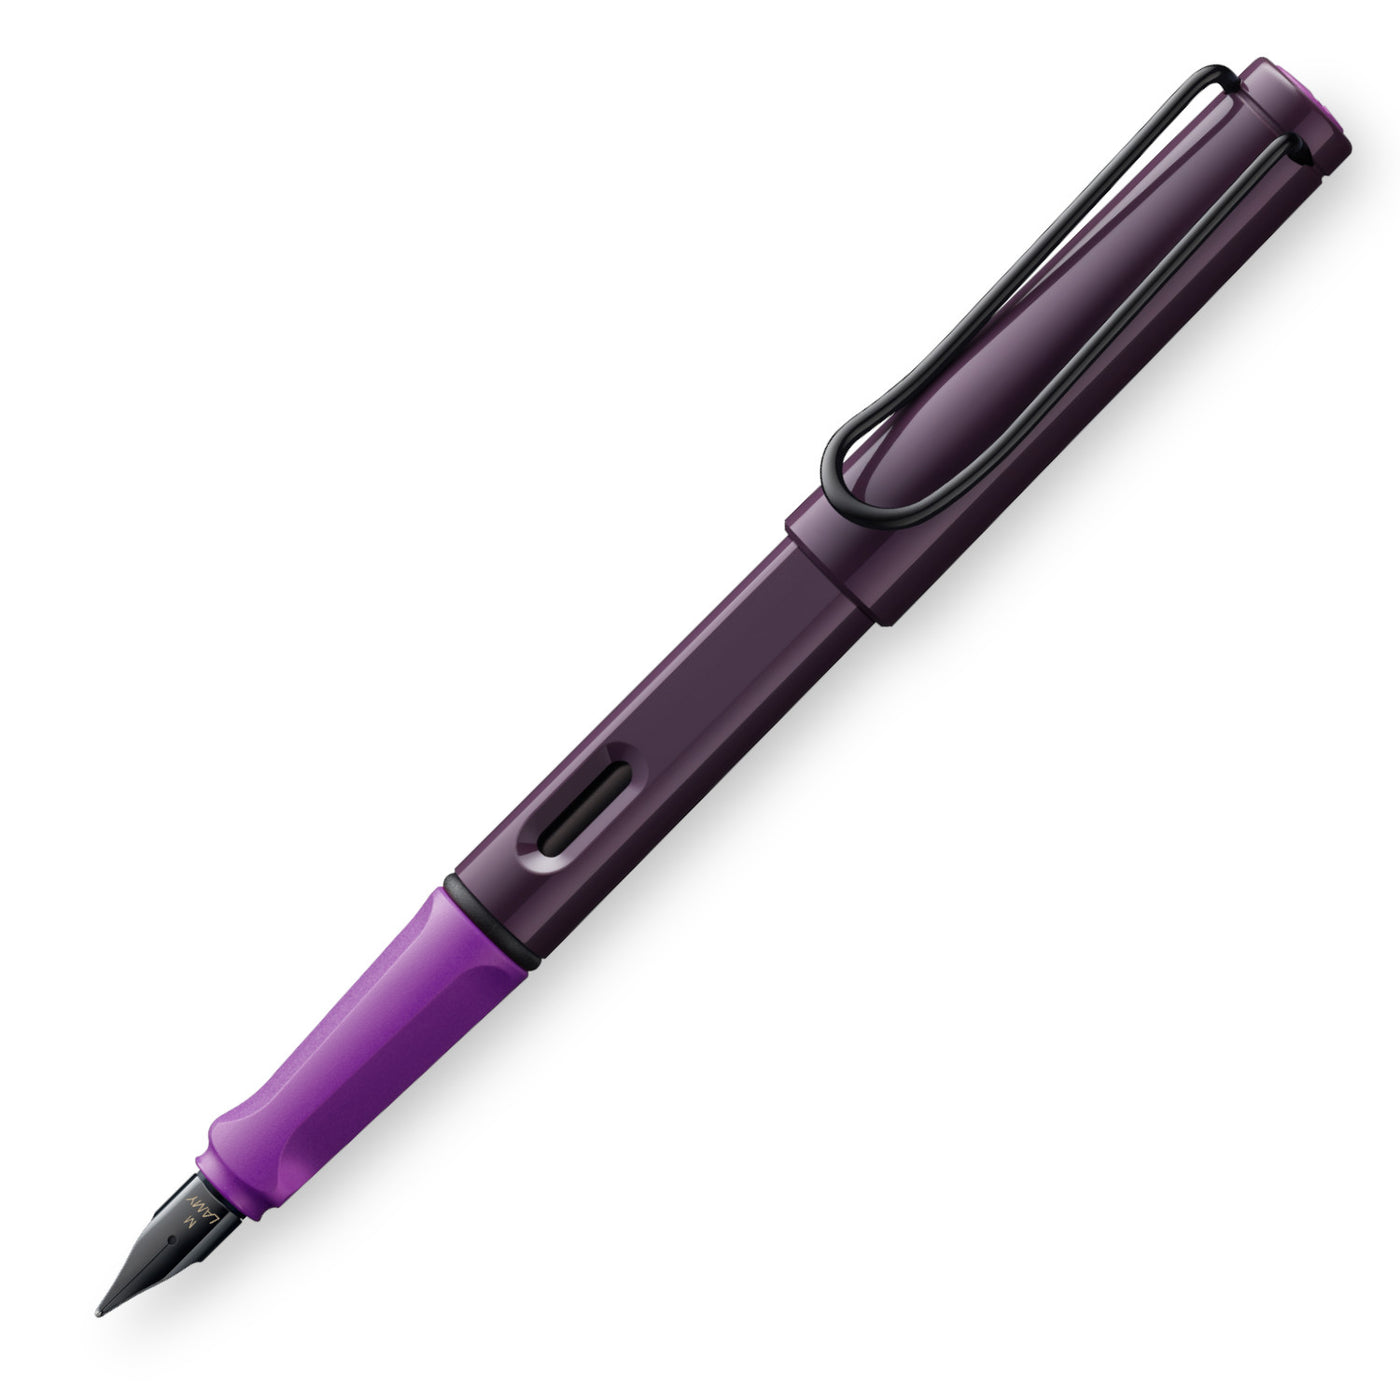 Lamy Safari Fountain Pen - Violet Blackberry (Special Edition)